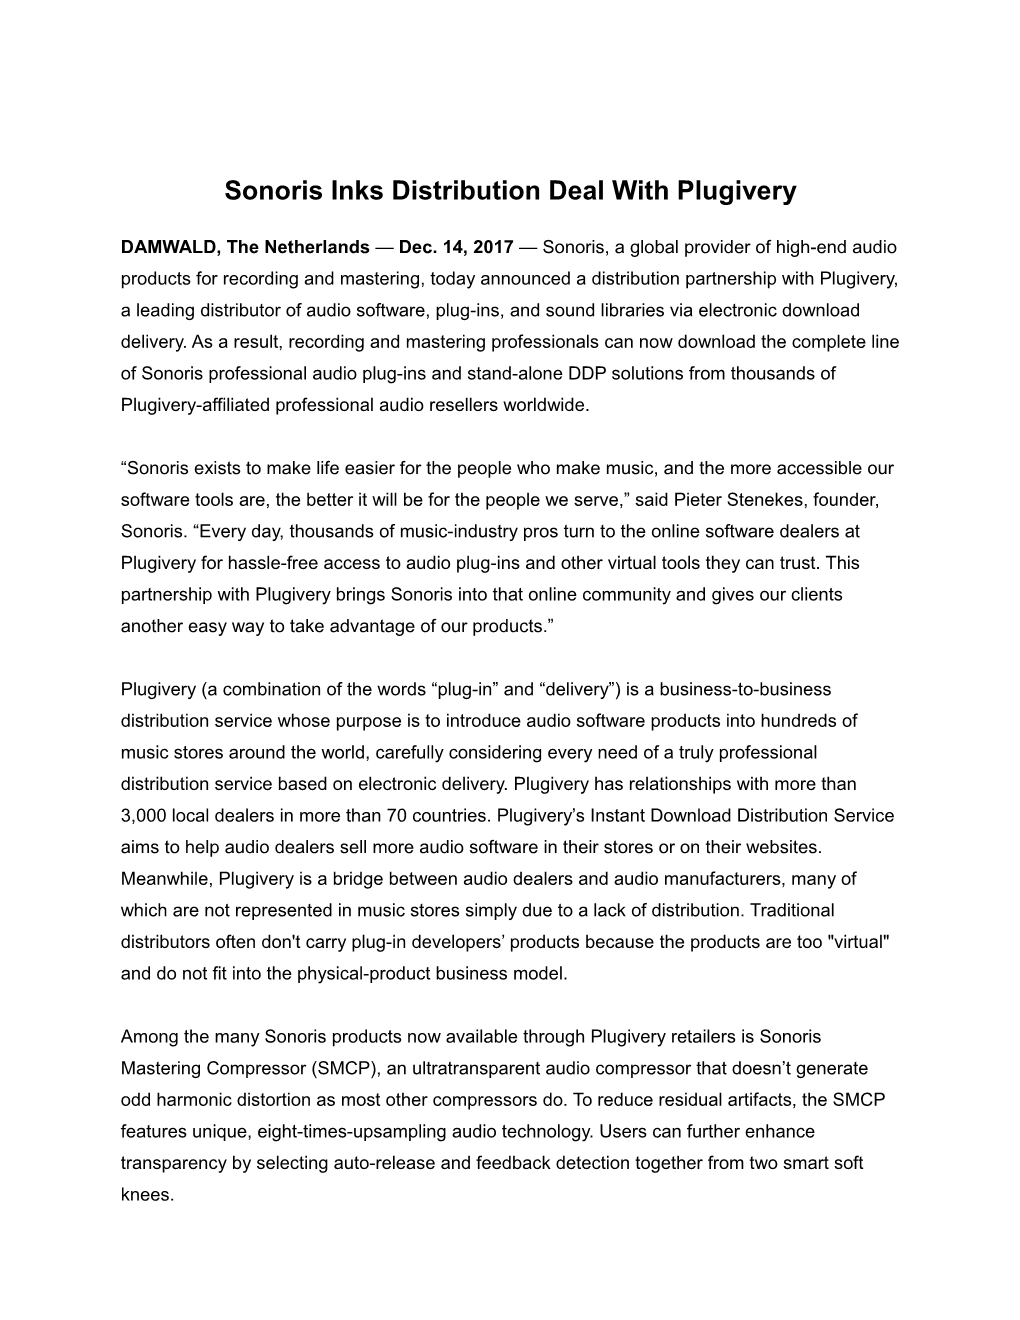 Sonoris Press Release